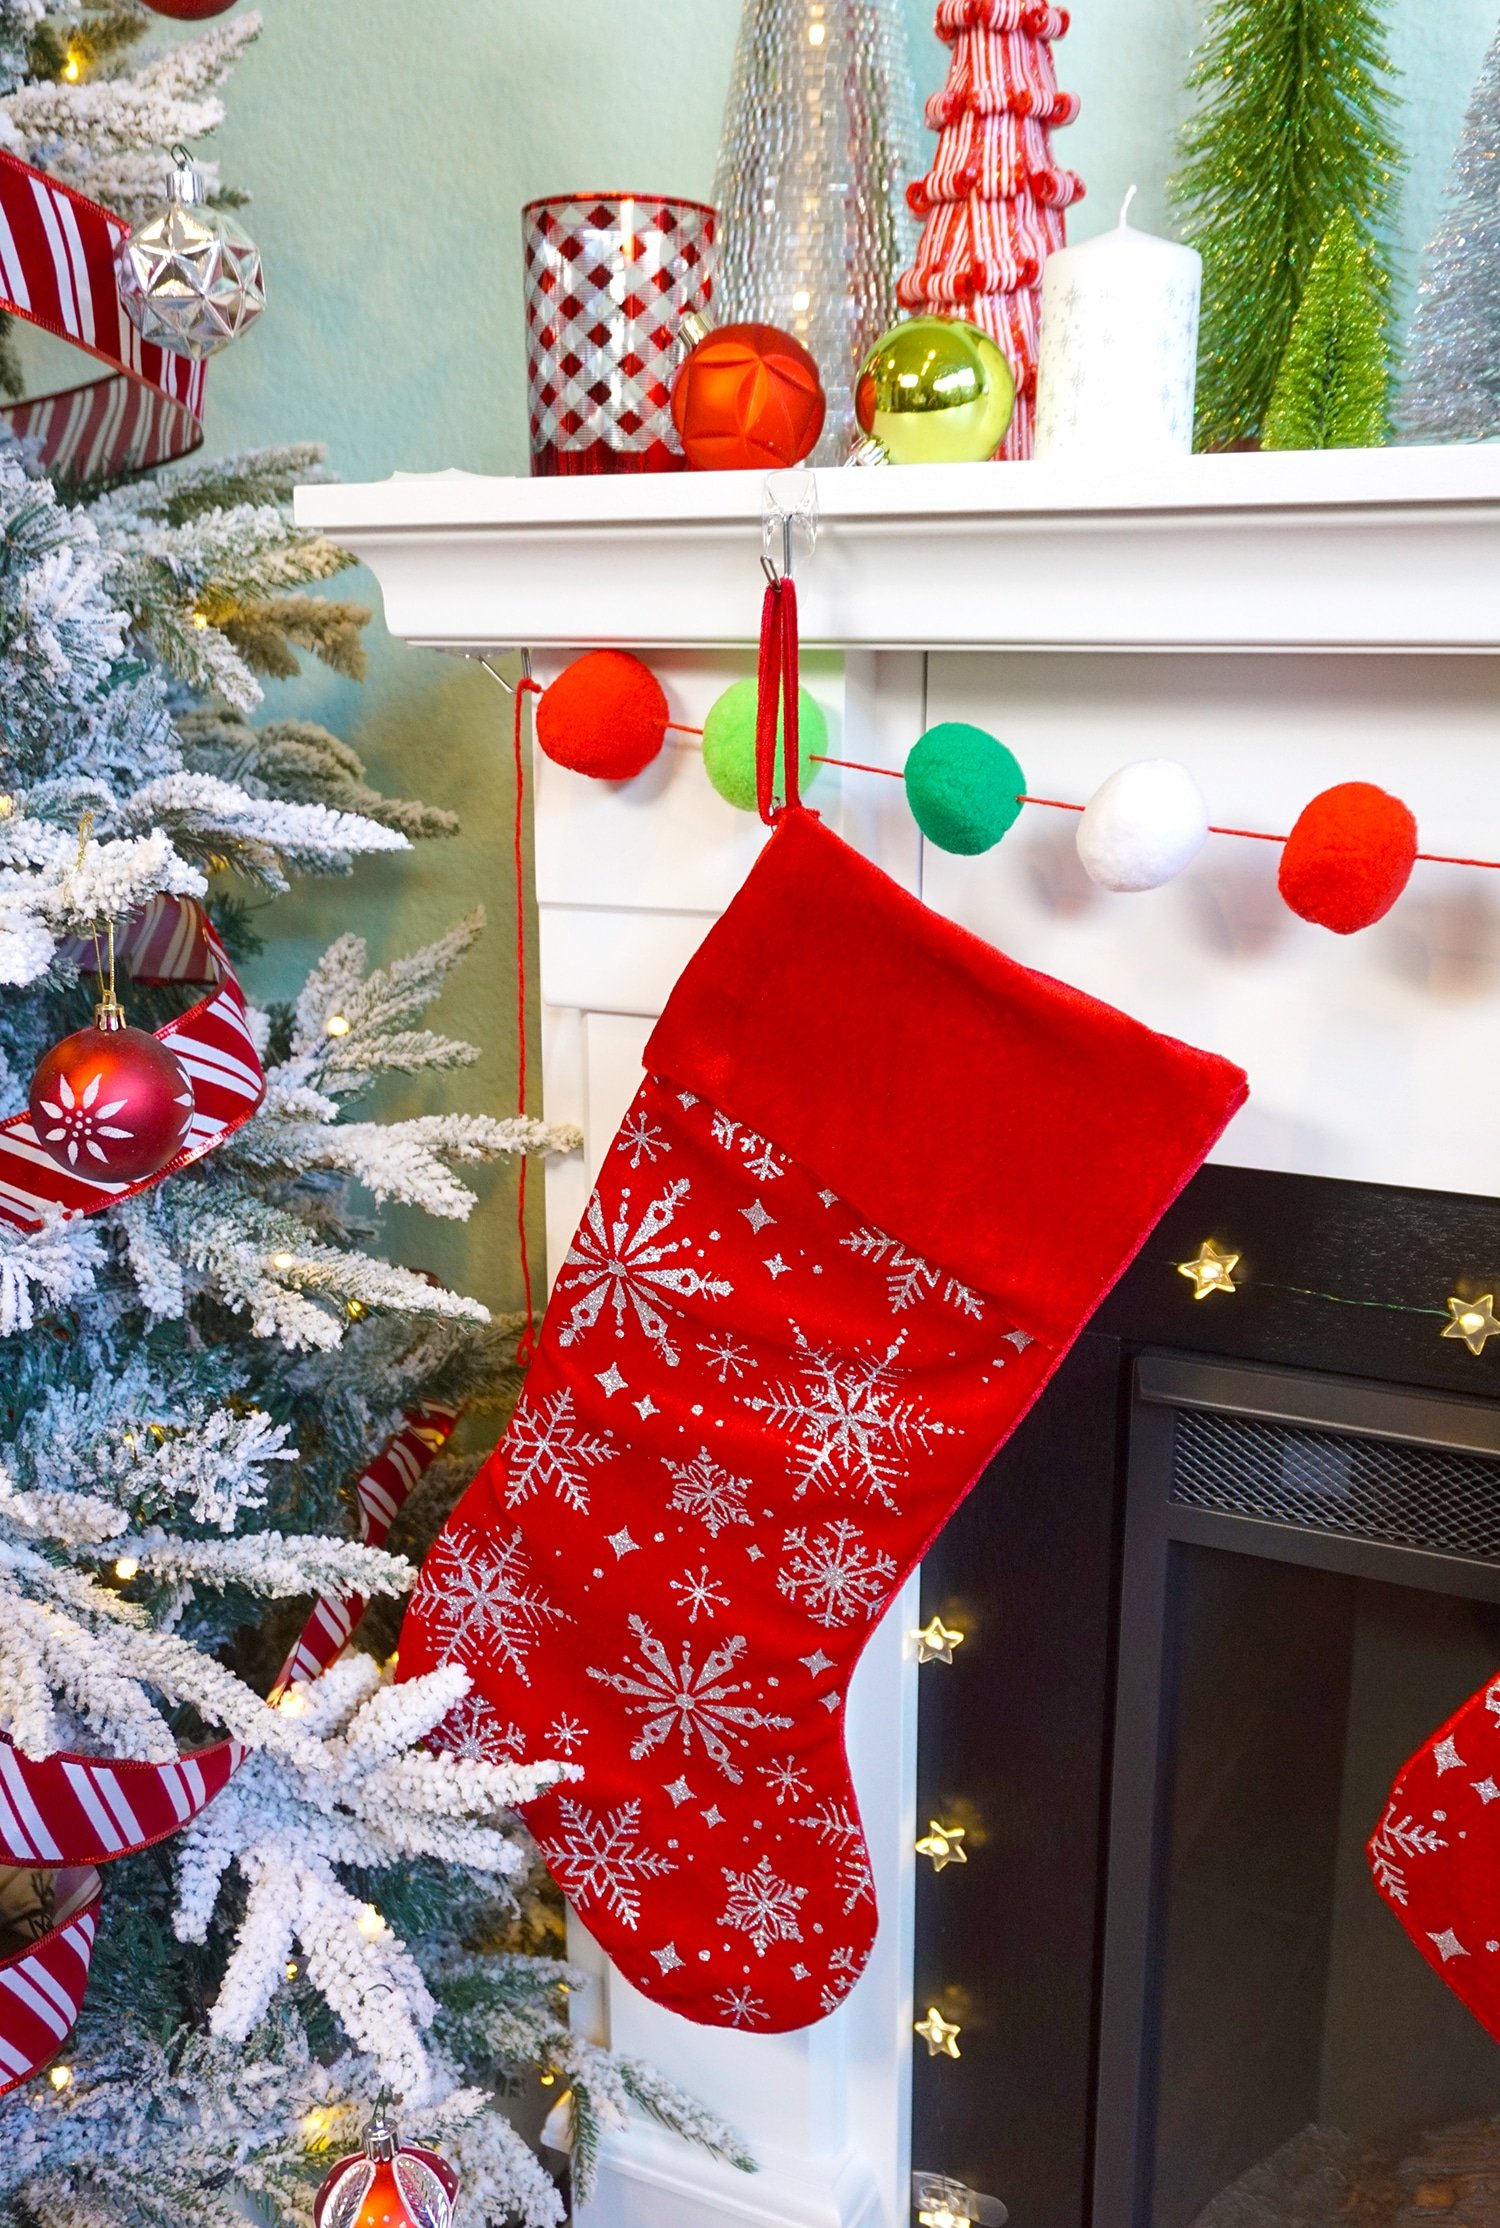 stocking and garland hung on mantel near christmas tree